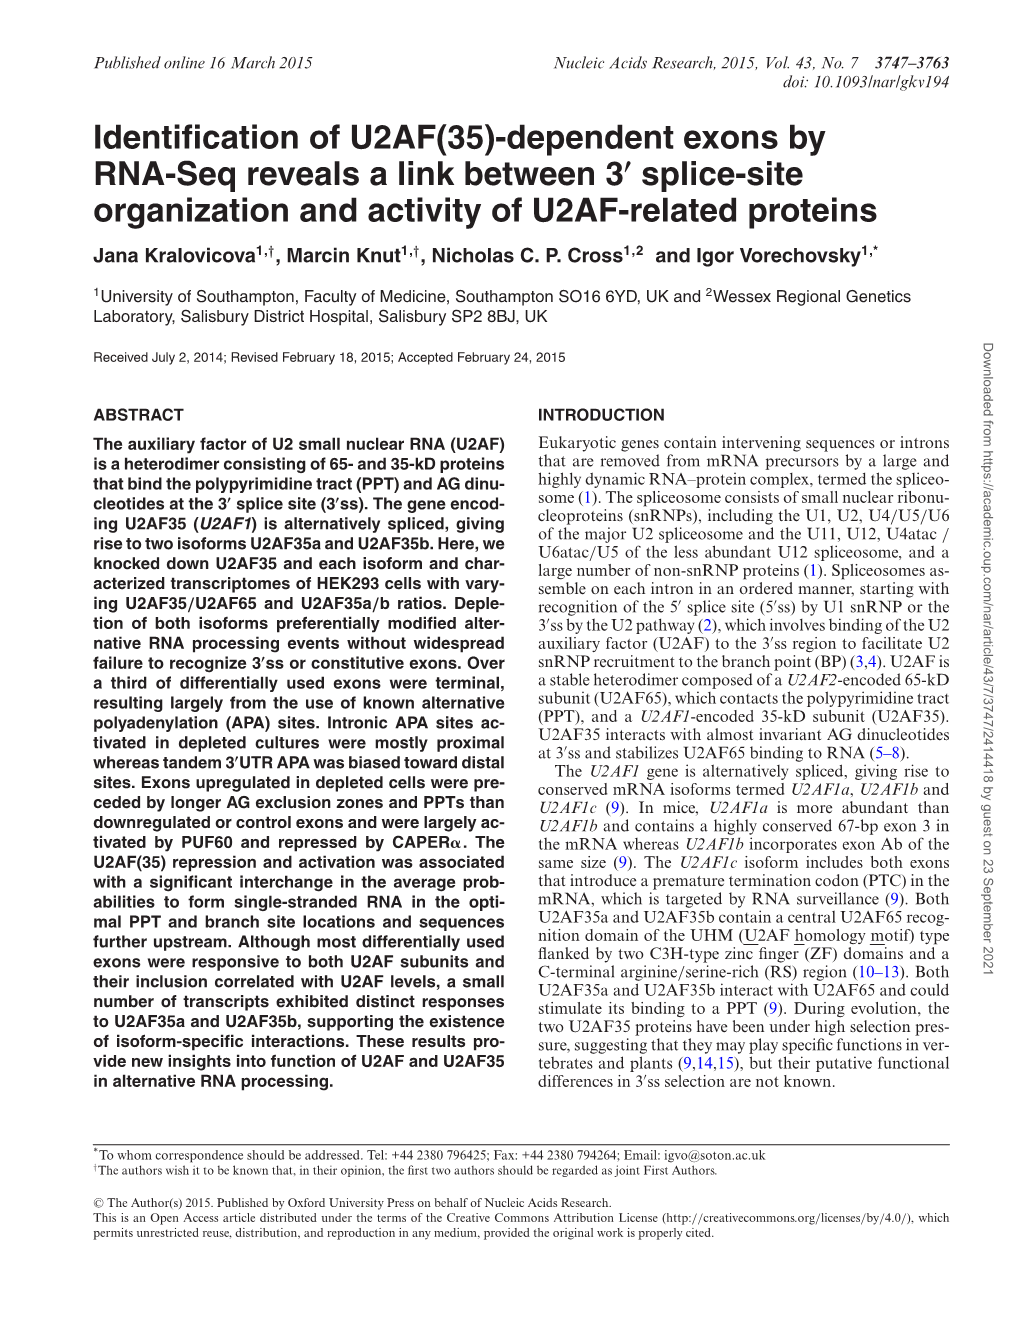 Identification of U2AF(35)-Dependent Exons by RNA-Seq Reveals a Link